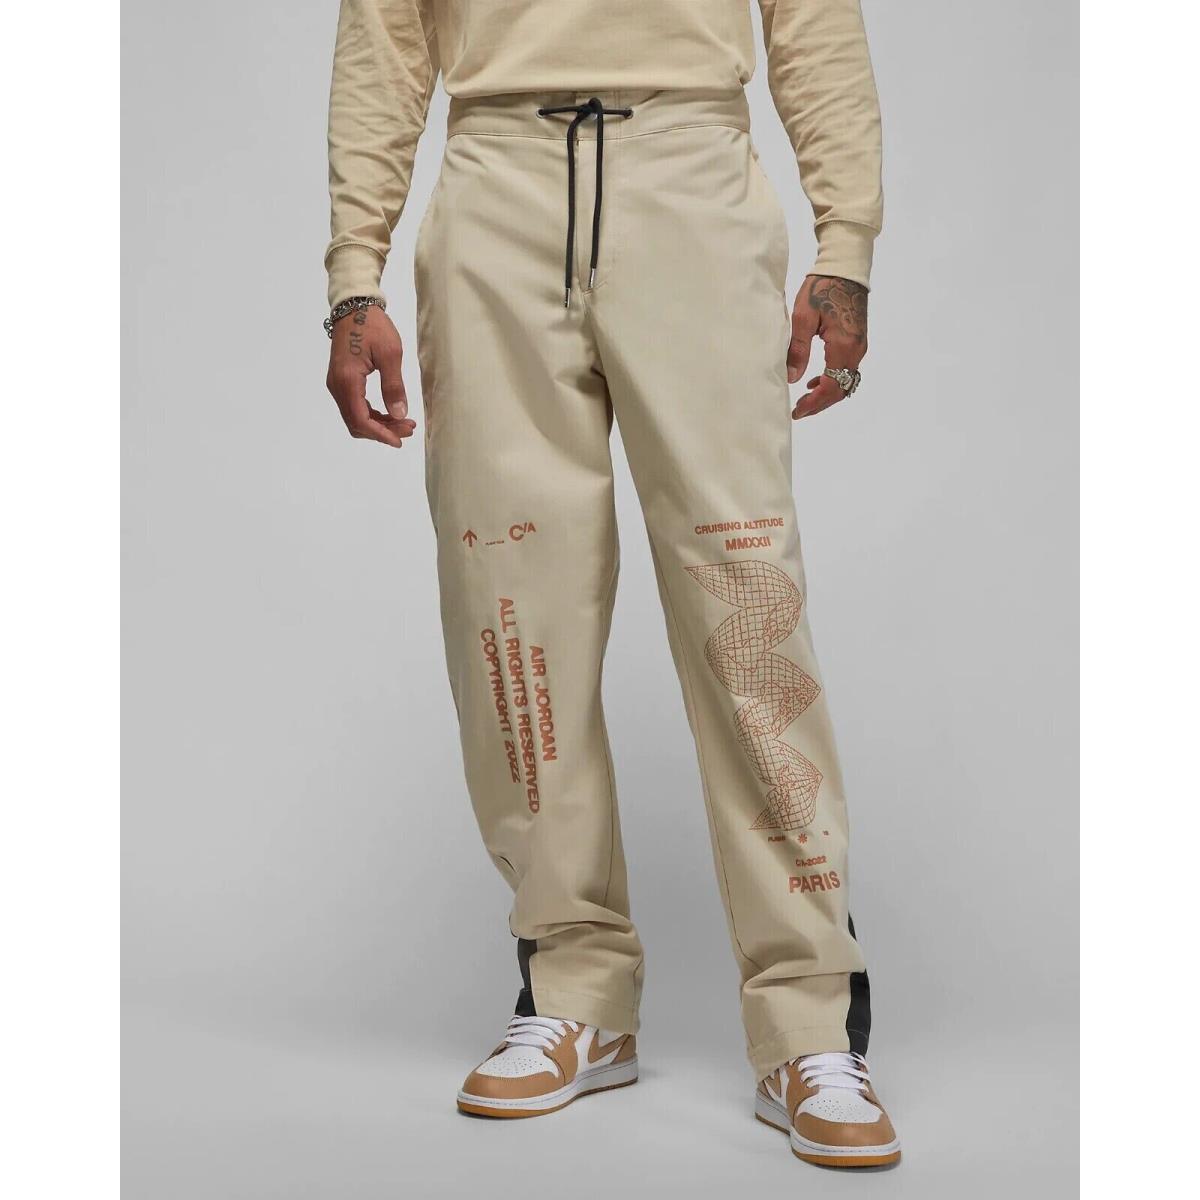 Men`s Nike Jordan Flight Heritage Lightweight Woven Pants DV1609-206 Sz S